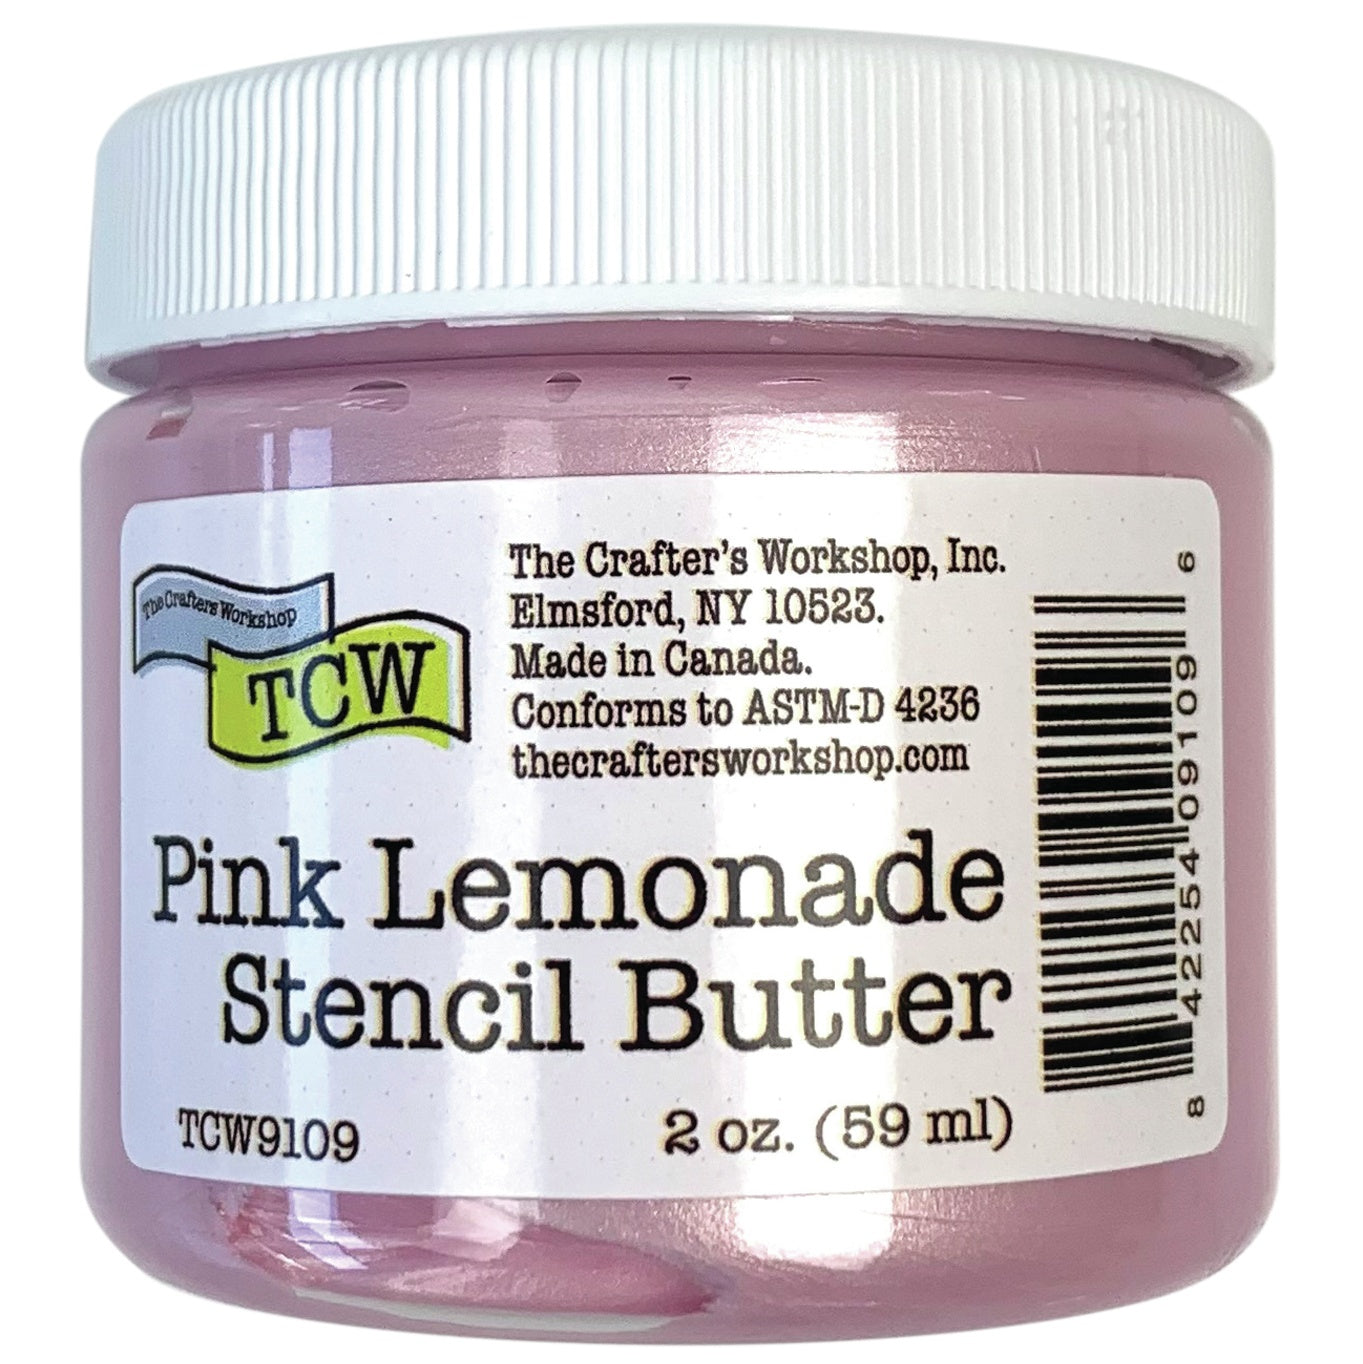 The Crafter's Workshop Pink Lemonade Stencil Butter